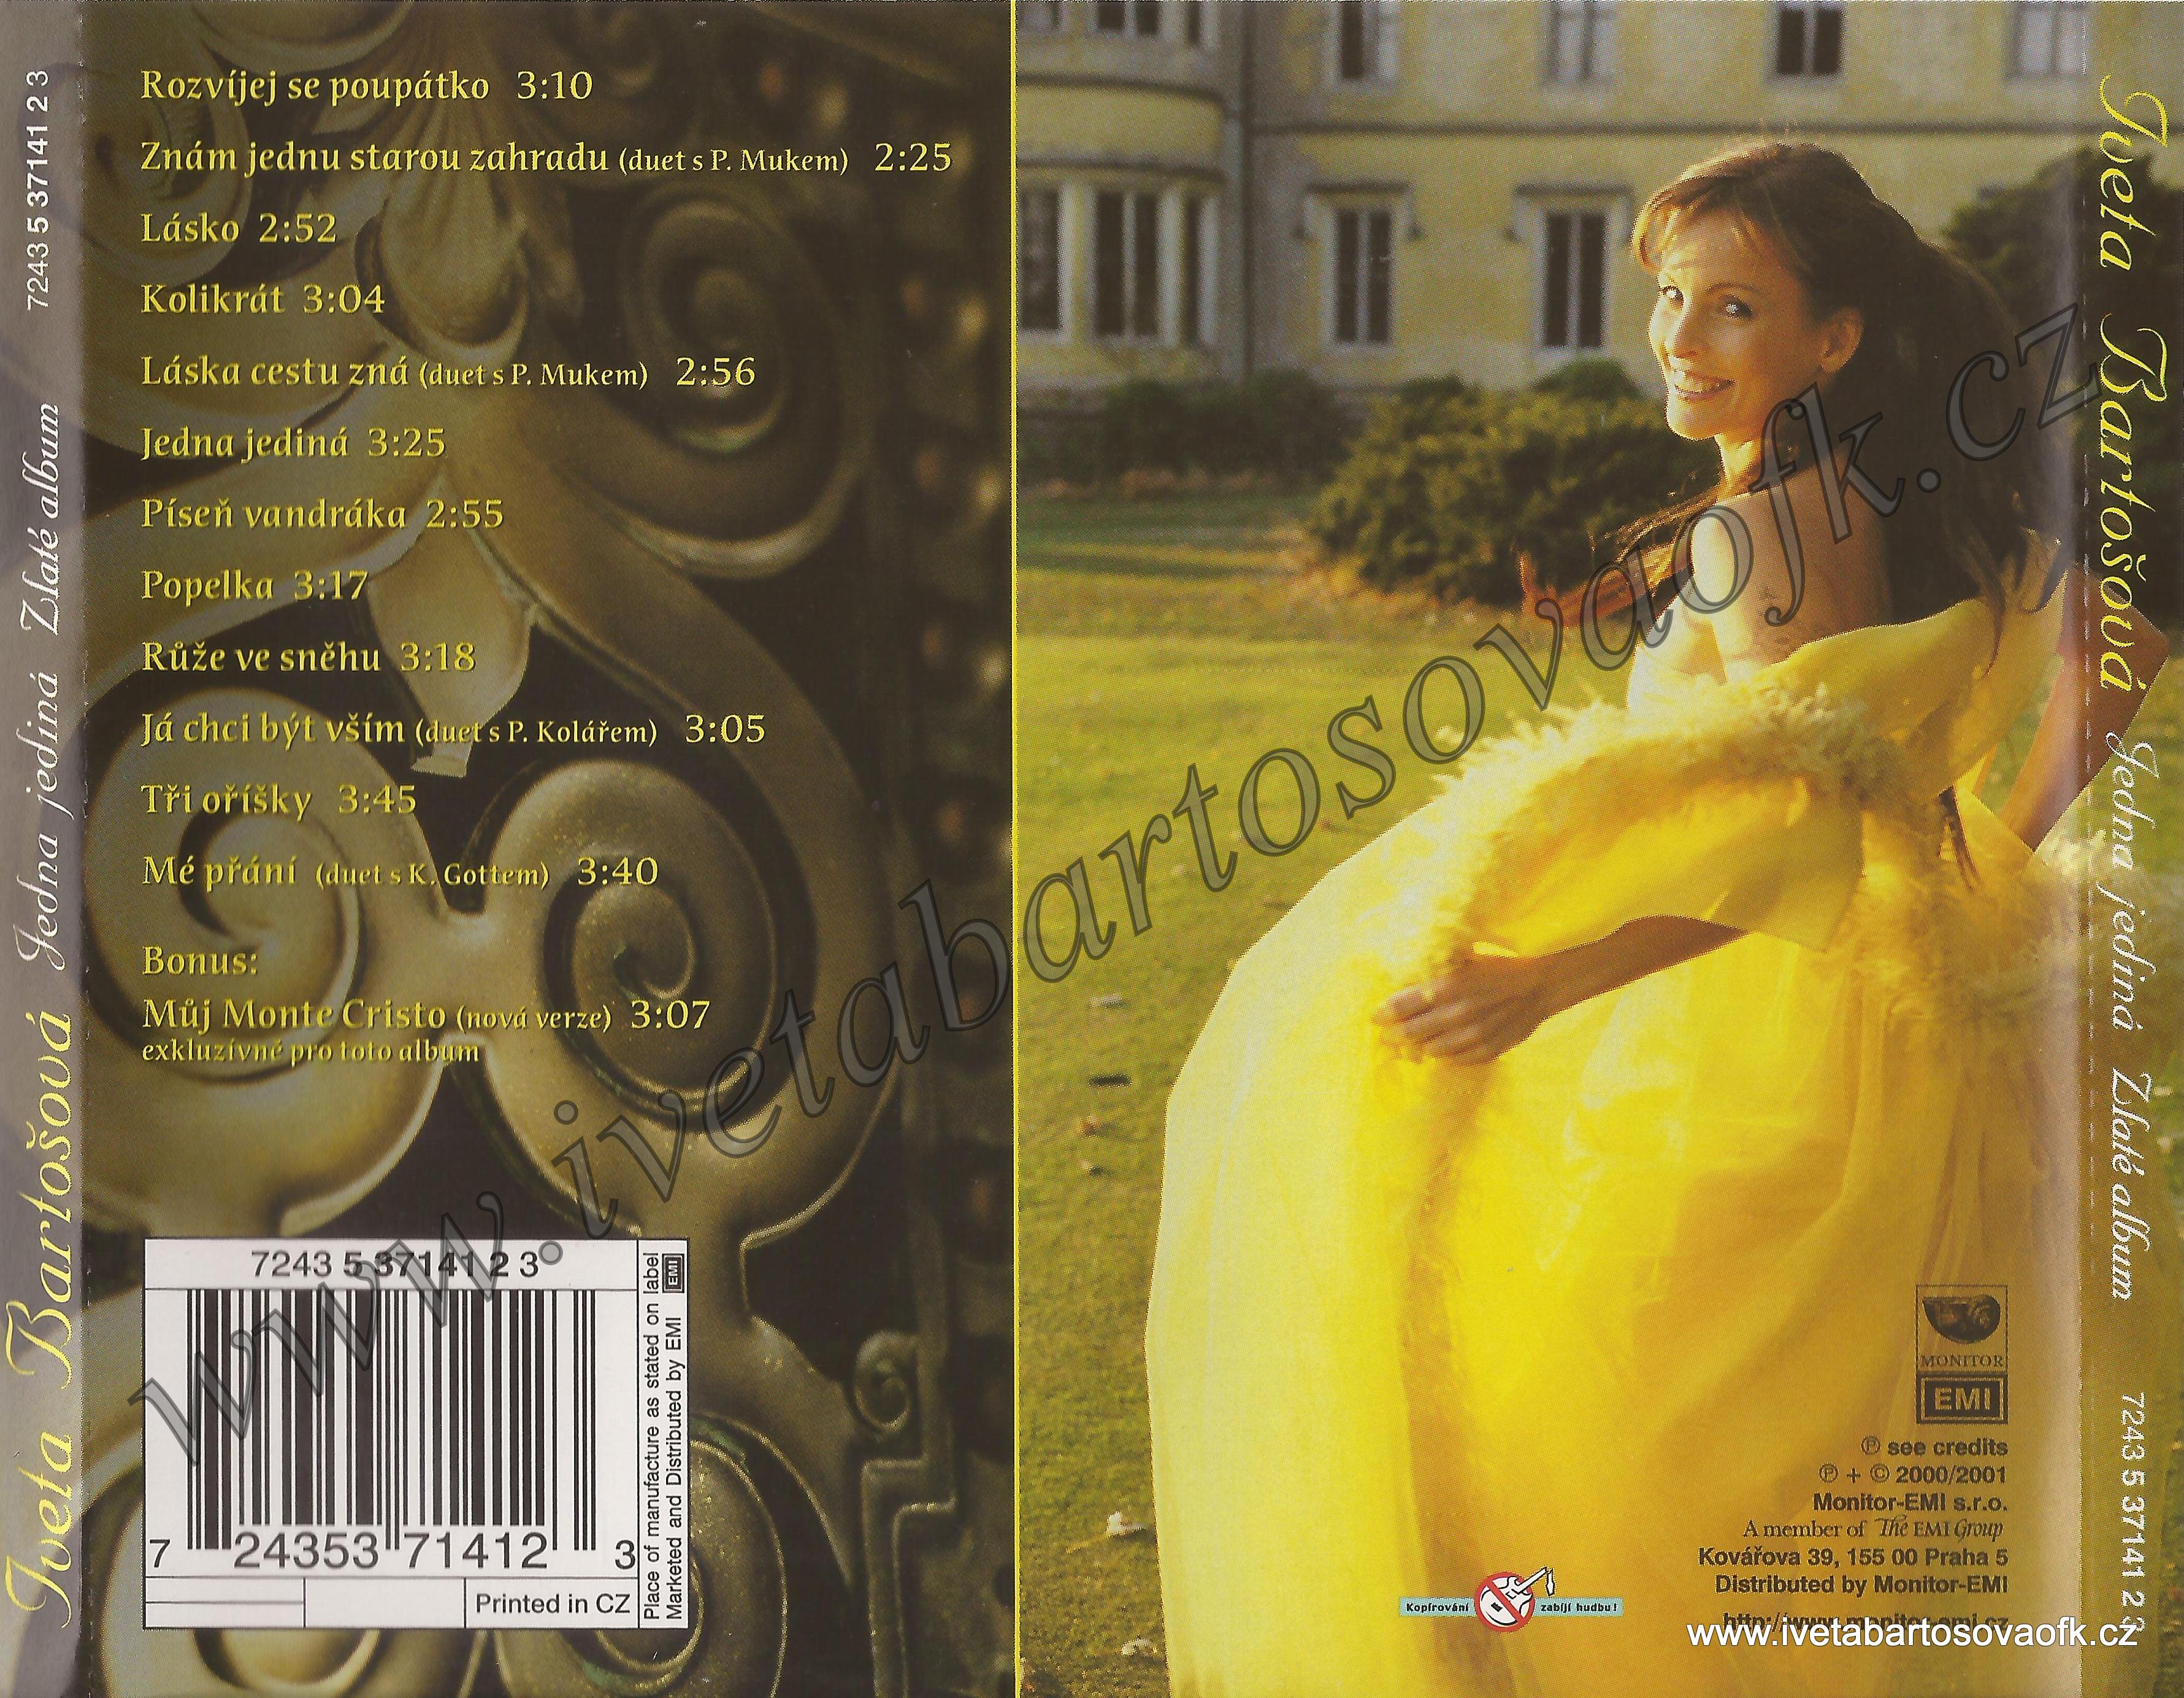 Jedna jediná Zlaté Album (2000) 7